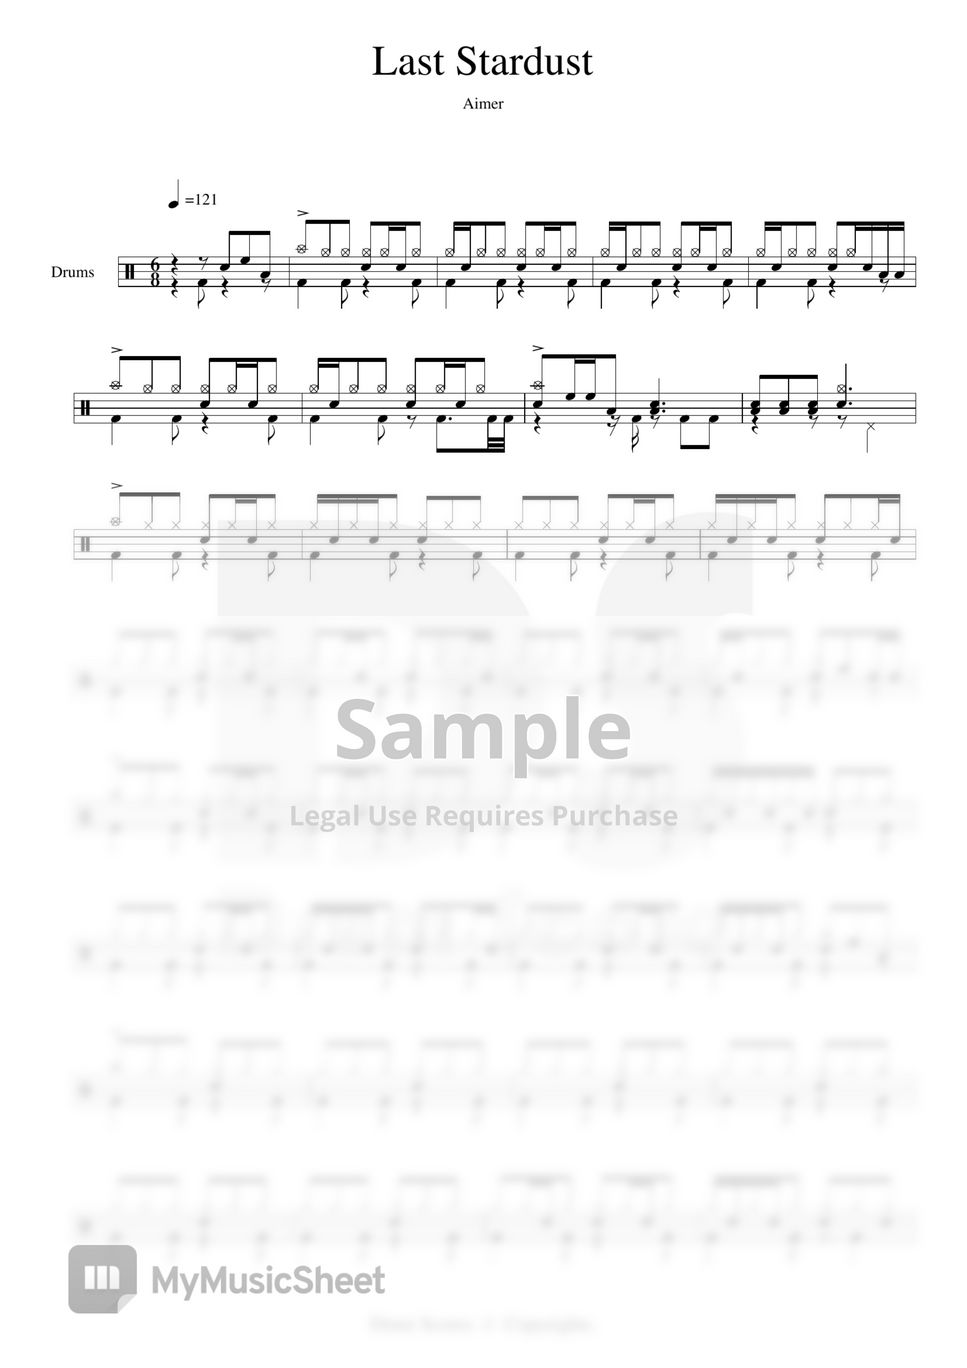 Aimer - Last Stardust (鼓譜) by Scoresdrum